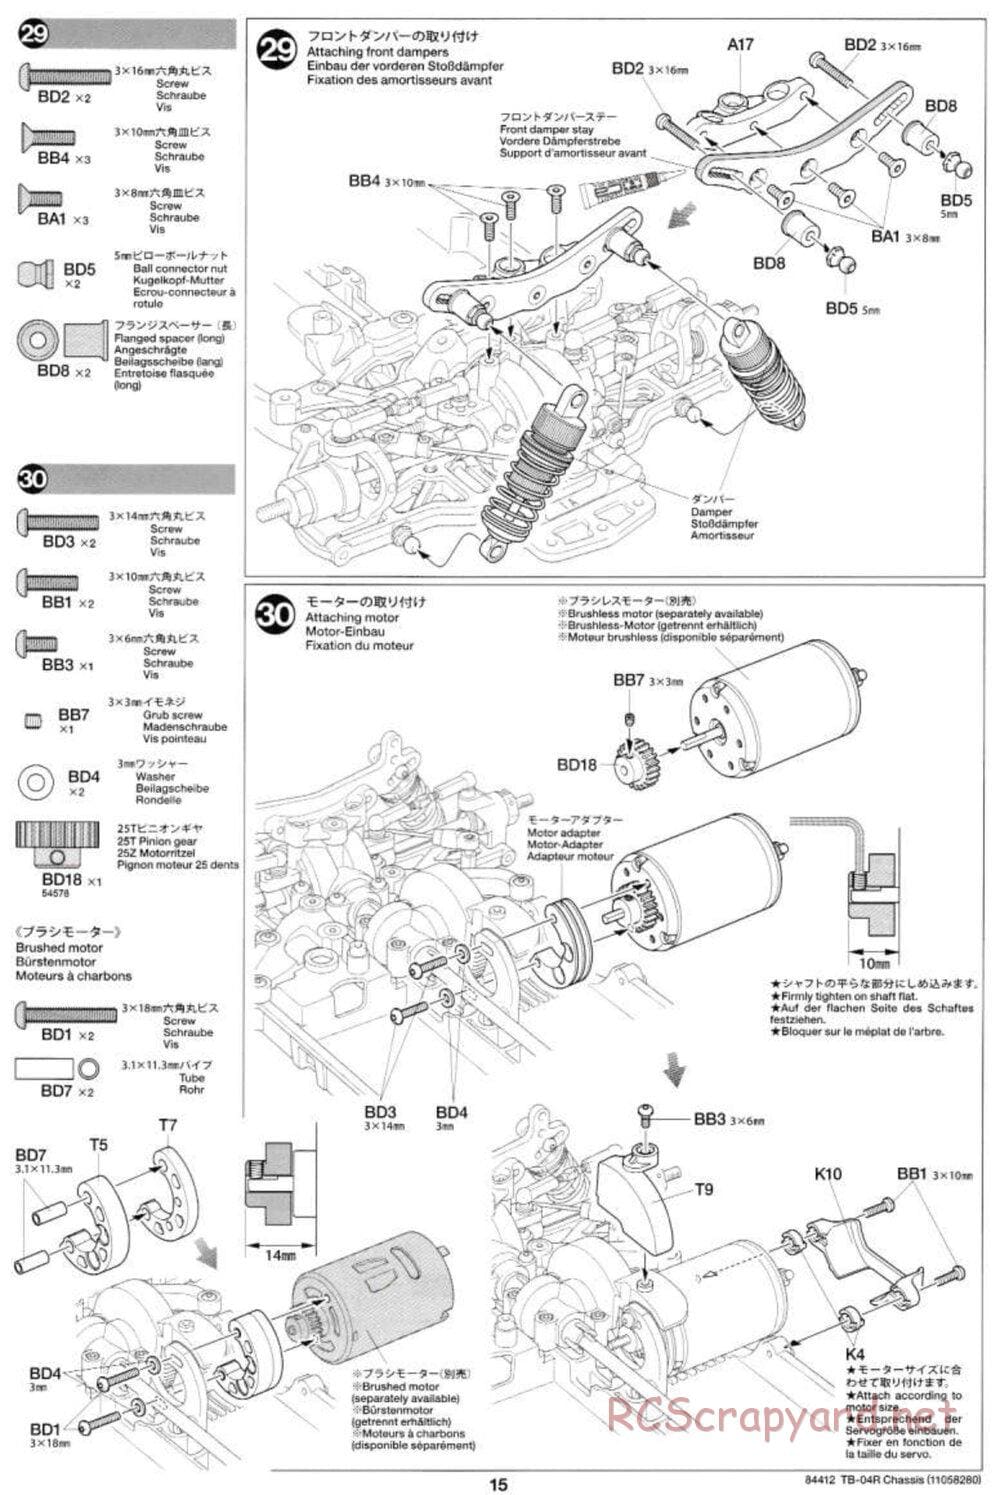 Tamiya - TB-04R Chassis Chassis - Manual - Page 15